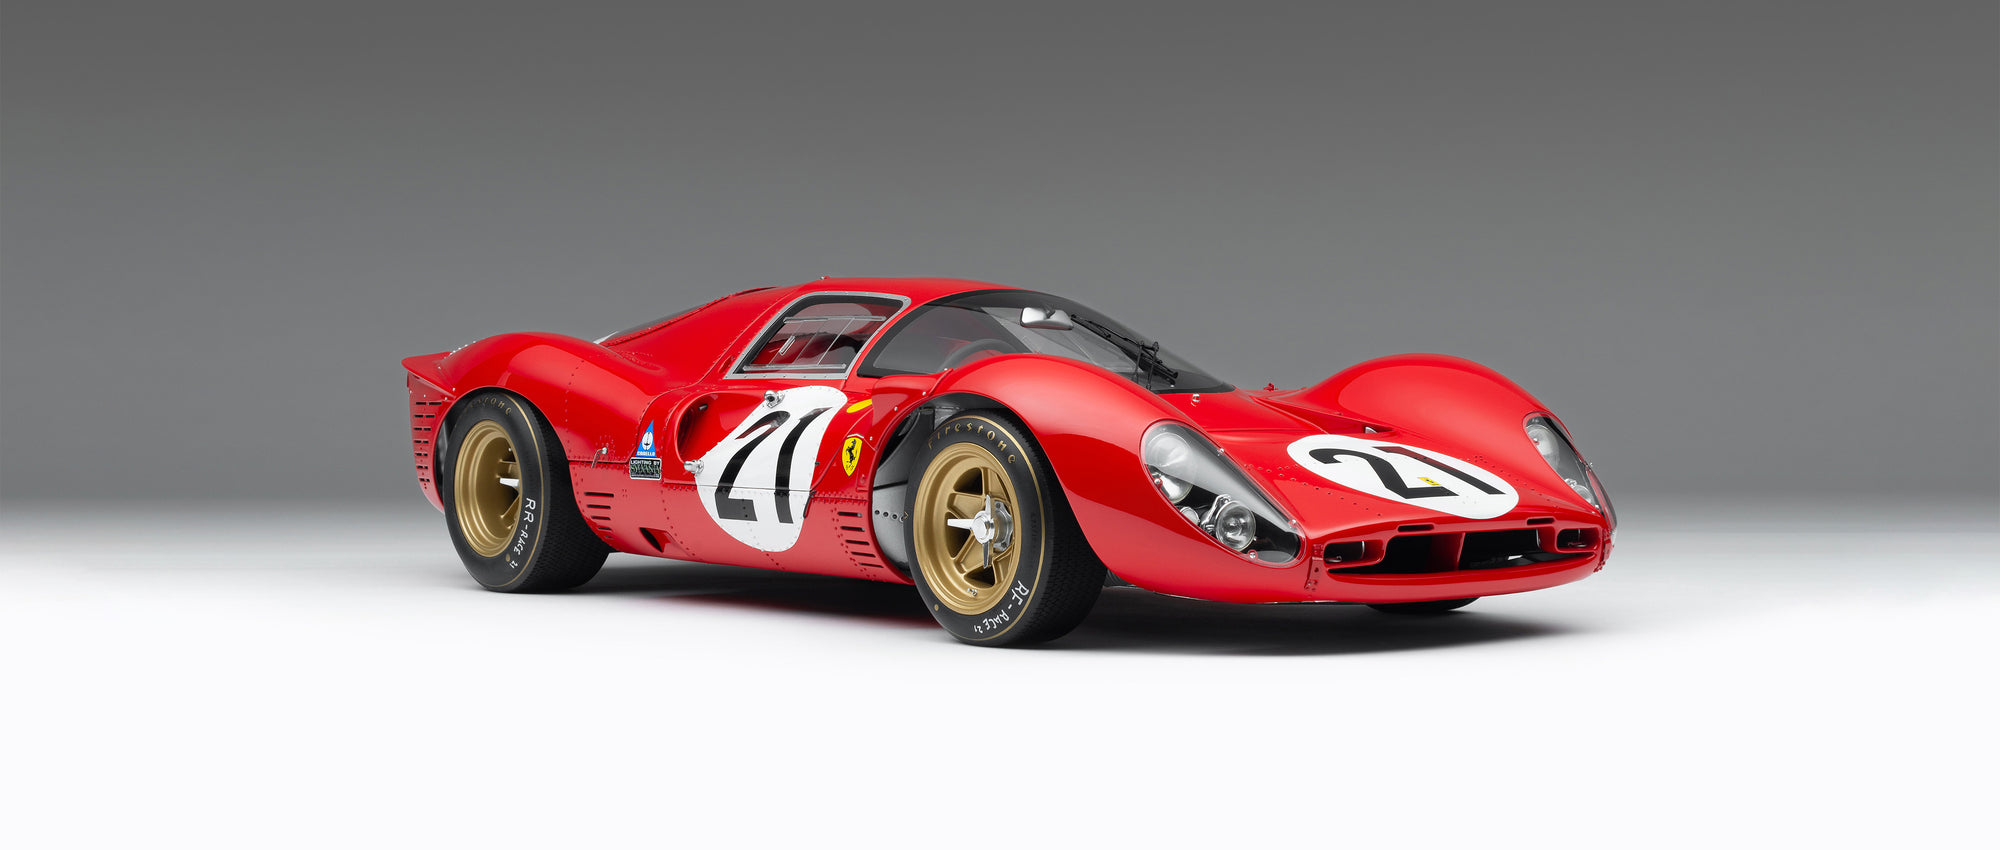 Ferrari 330 P4 - 1967 Le Mans - 2do lugar - Ganador de la clase